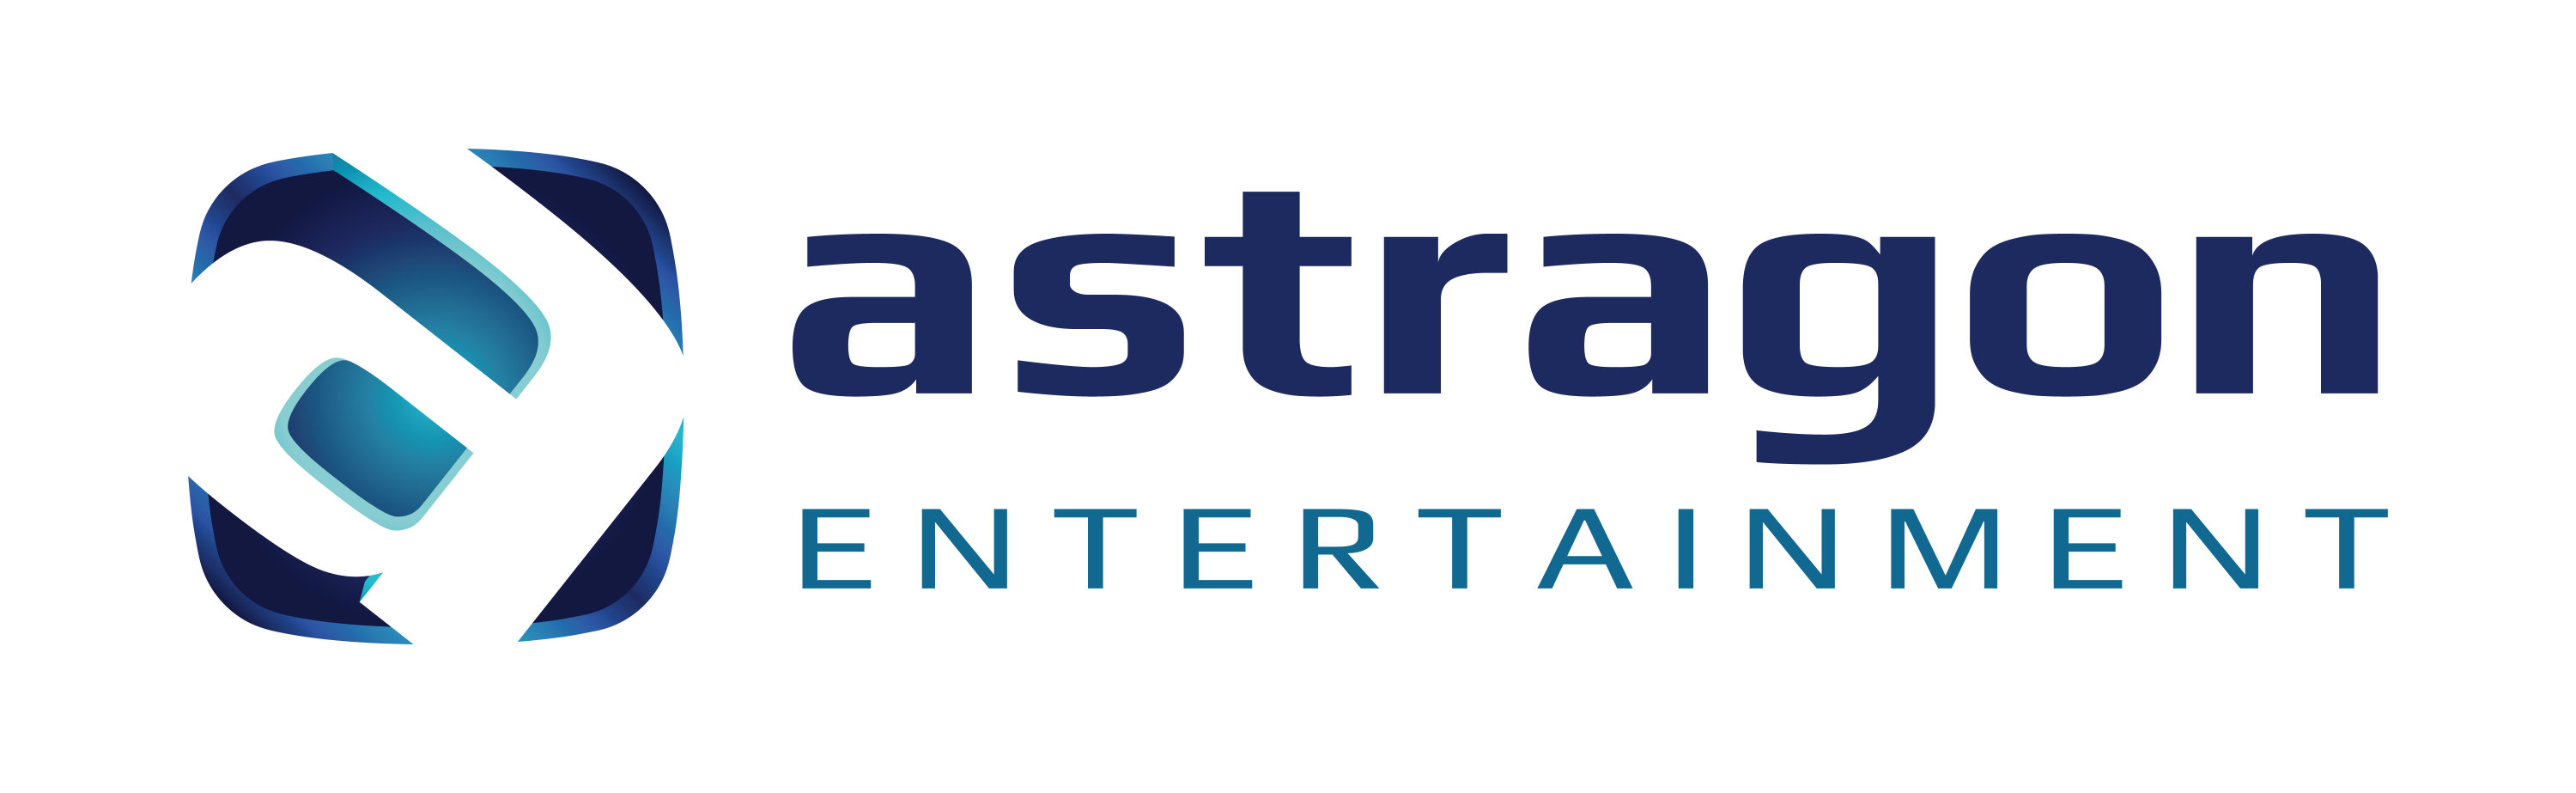 Datei:Astragon entertainment logo-gamezone.jpg – Wikipedia